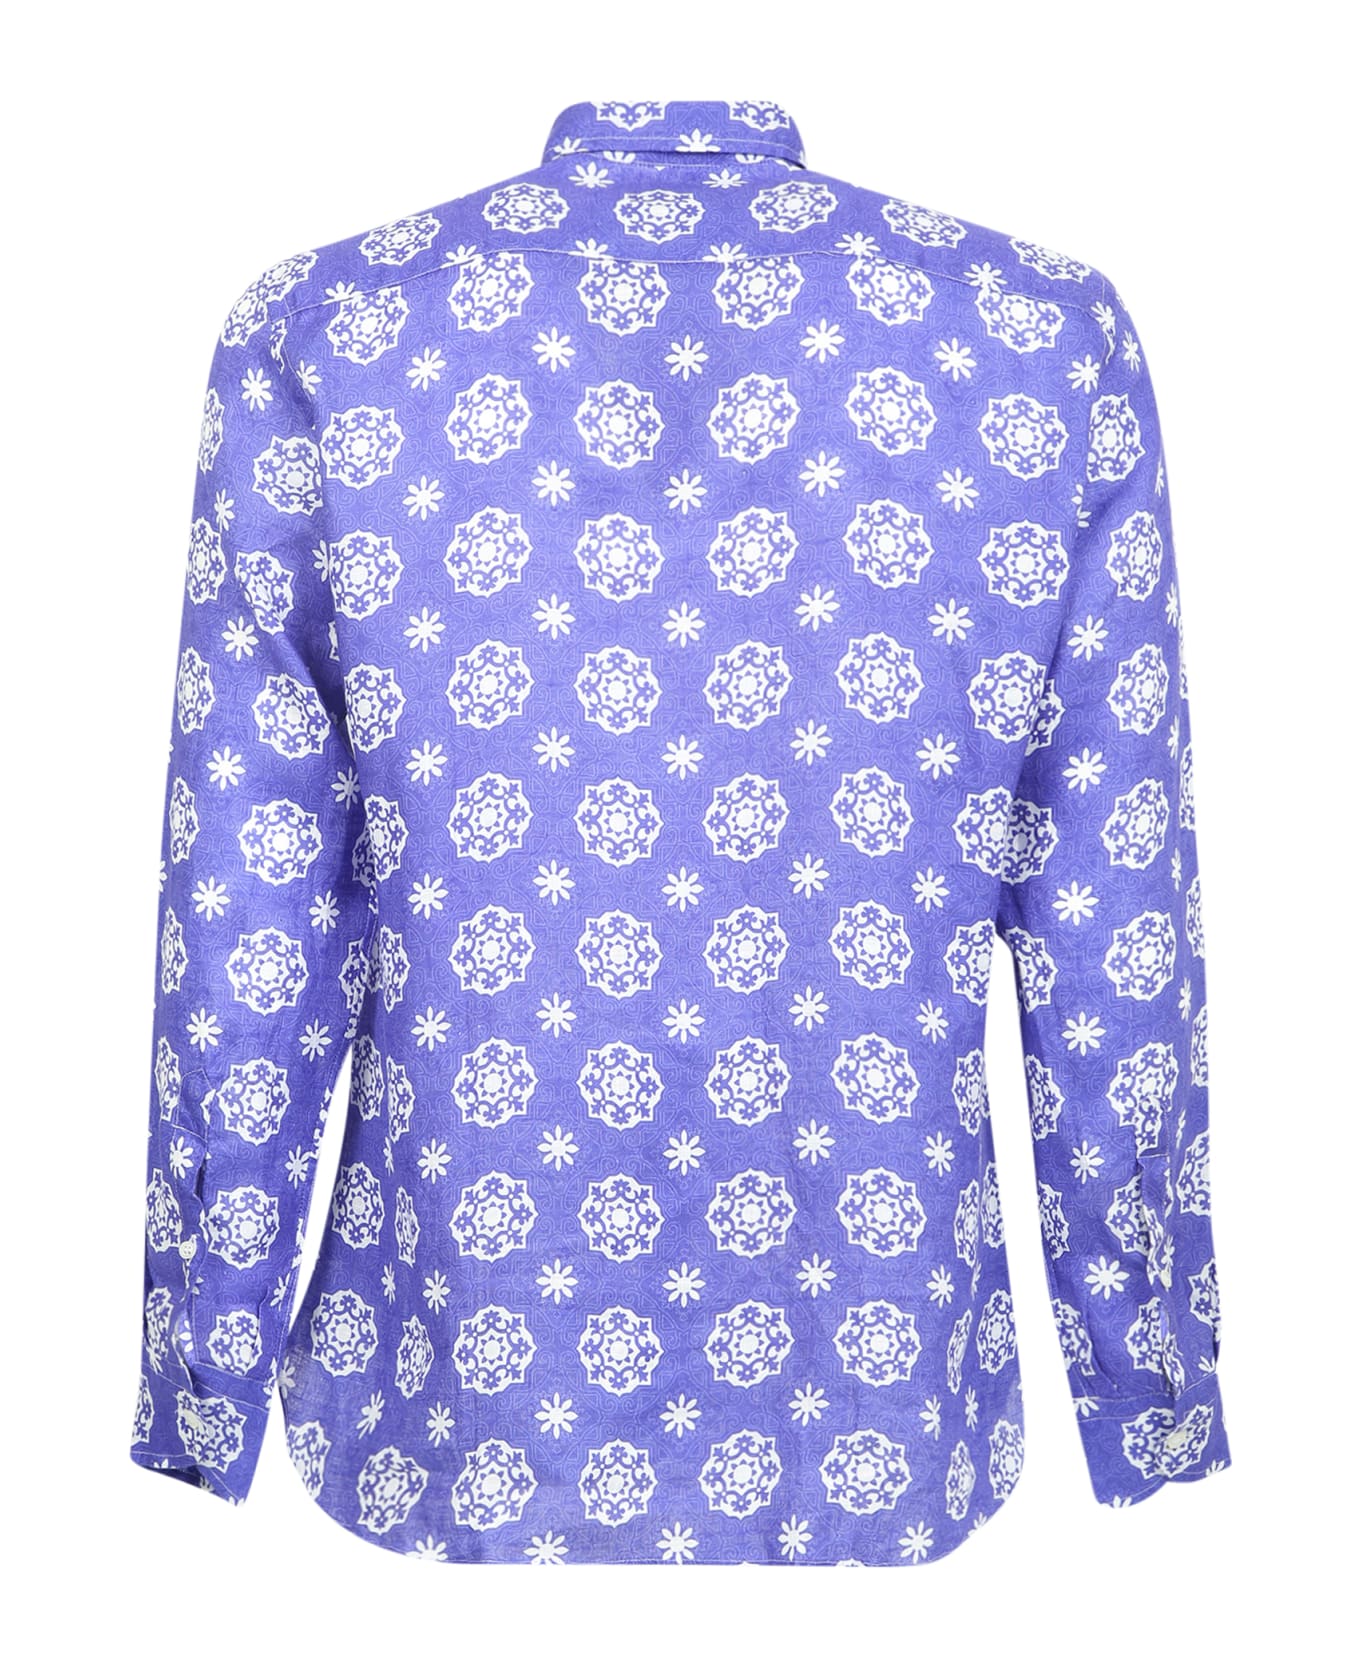 Peninsula Swimwear Filicudi Linen Shirt - Blue シャツ